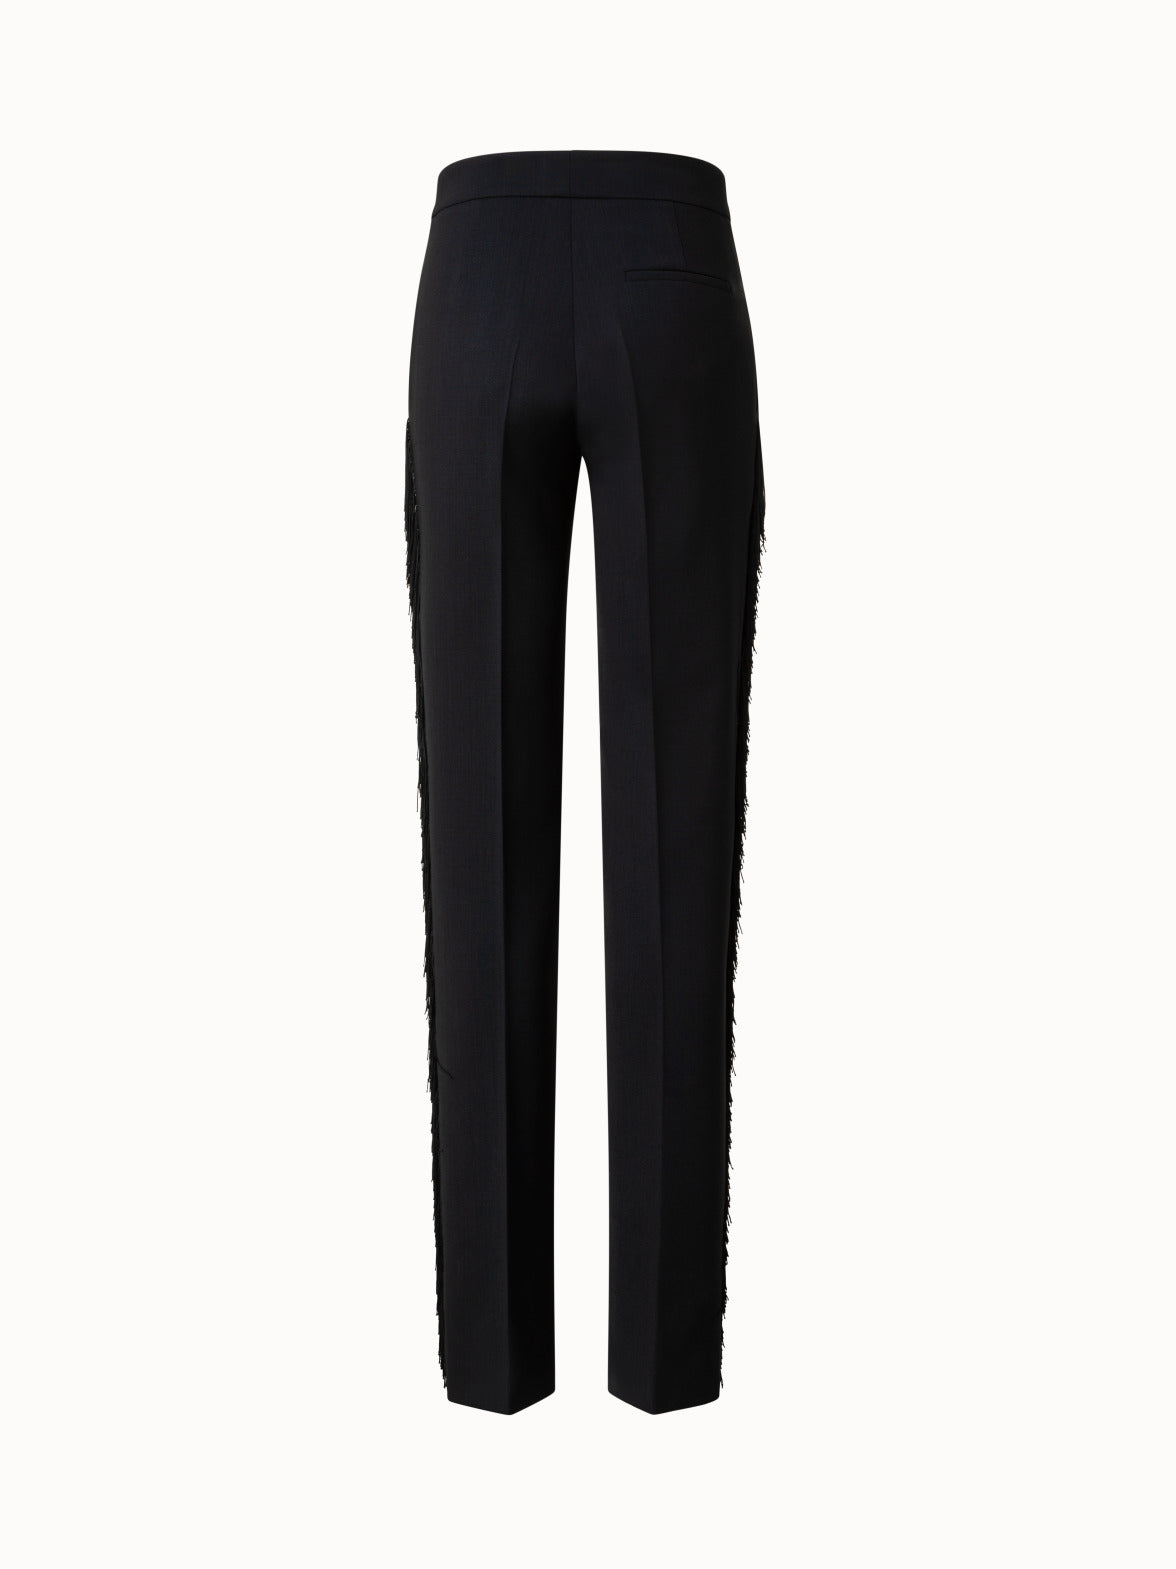 Chic Office Pants - Black Trouser Pants - High Waisted Pants - Lulus